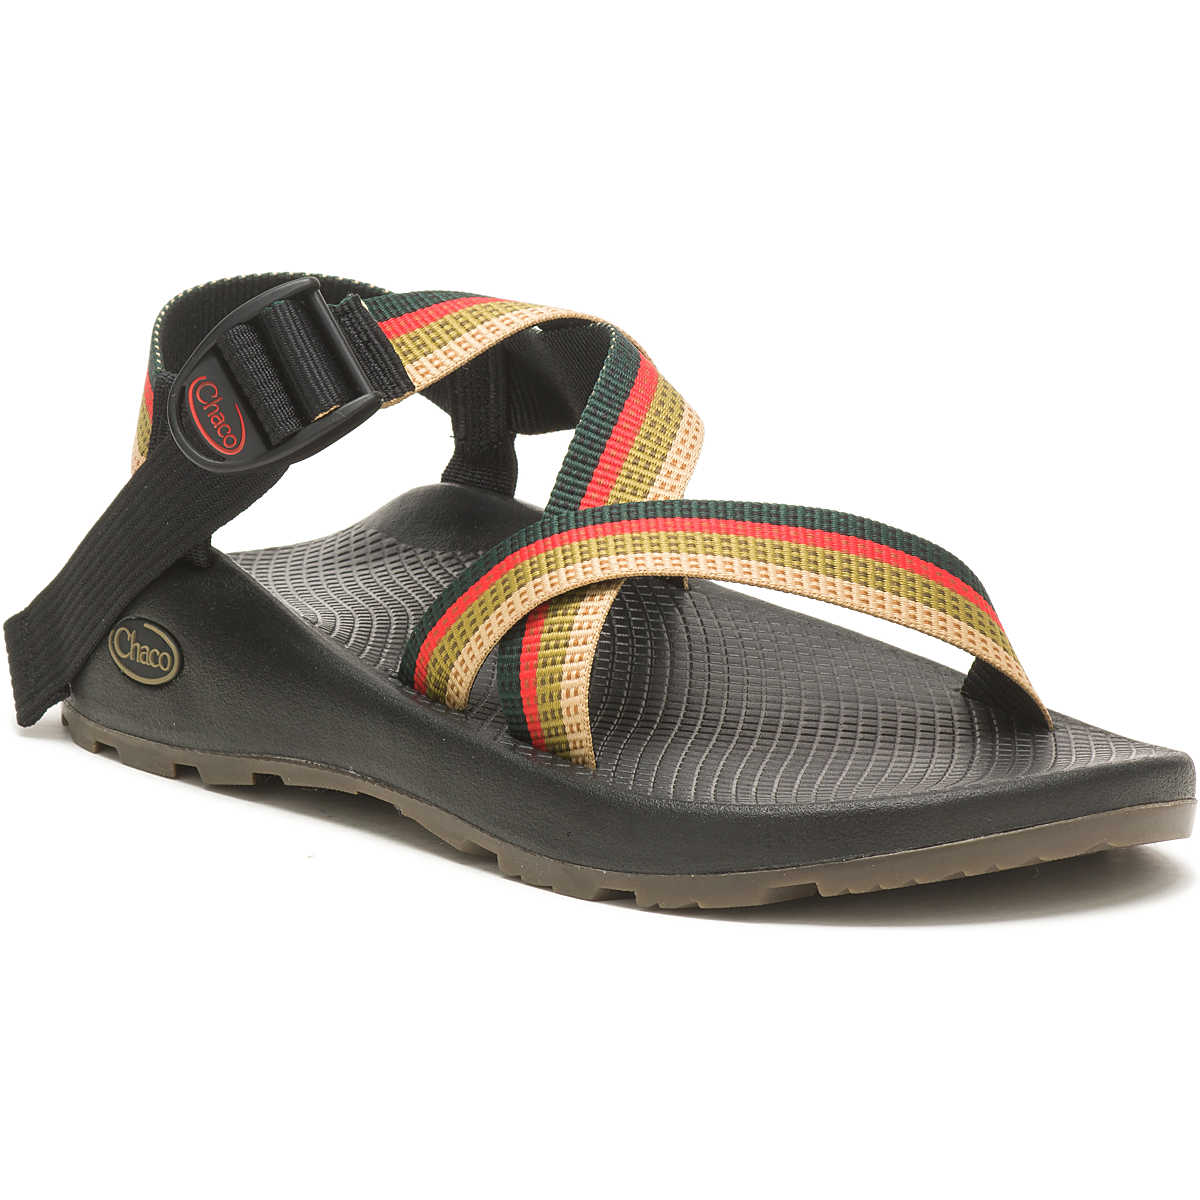 Chaco Men's Z/1 Classic Sandals - Tetra Moss